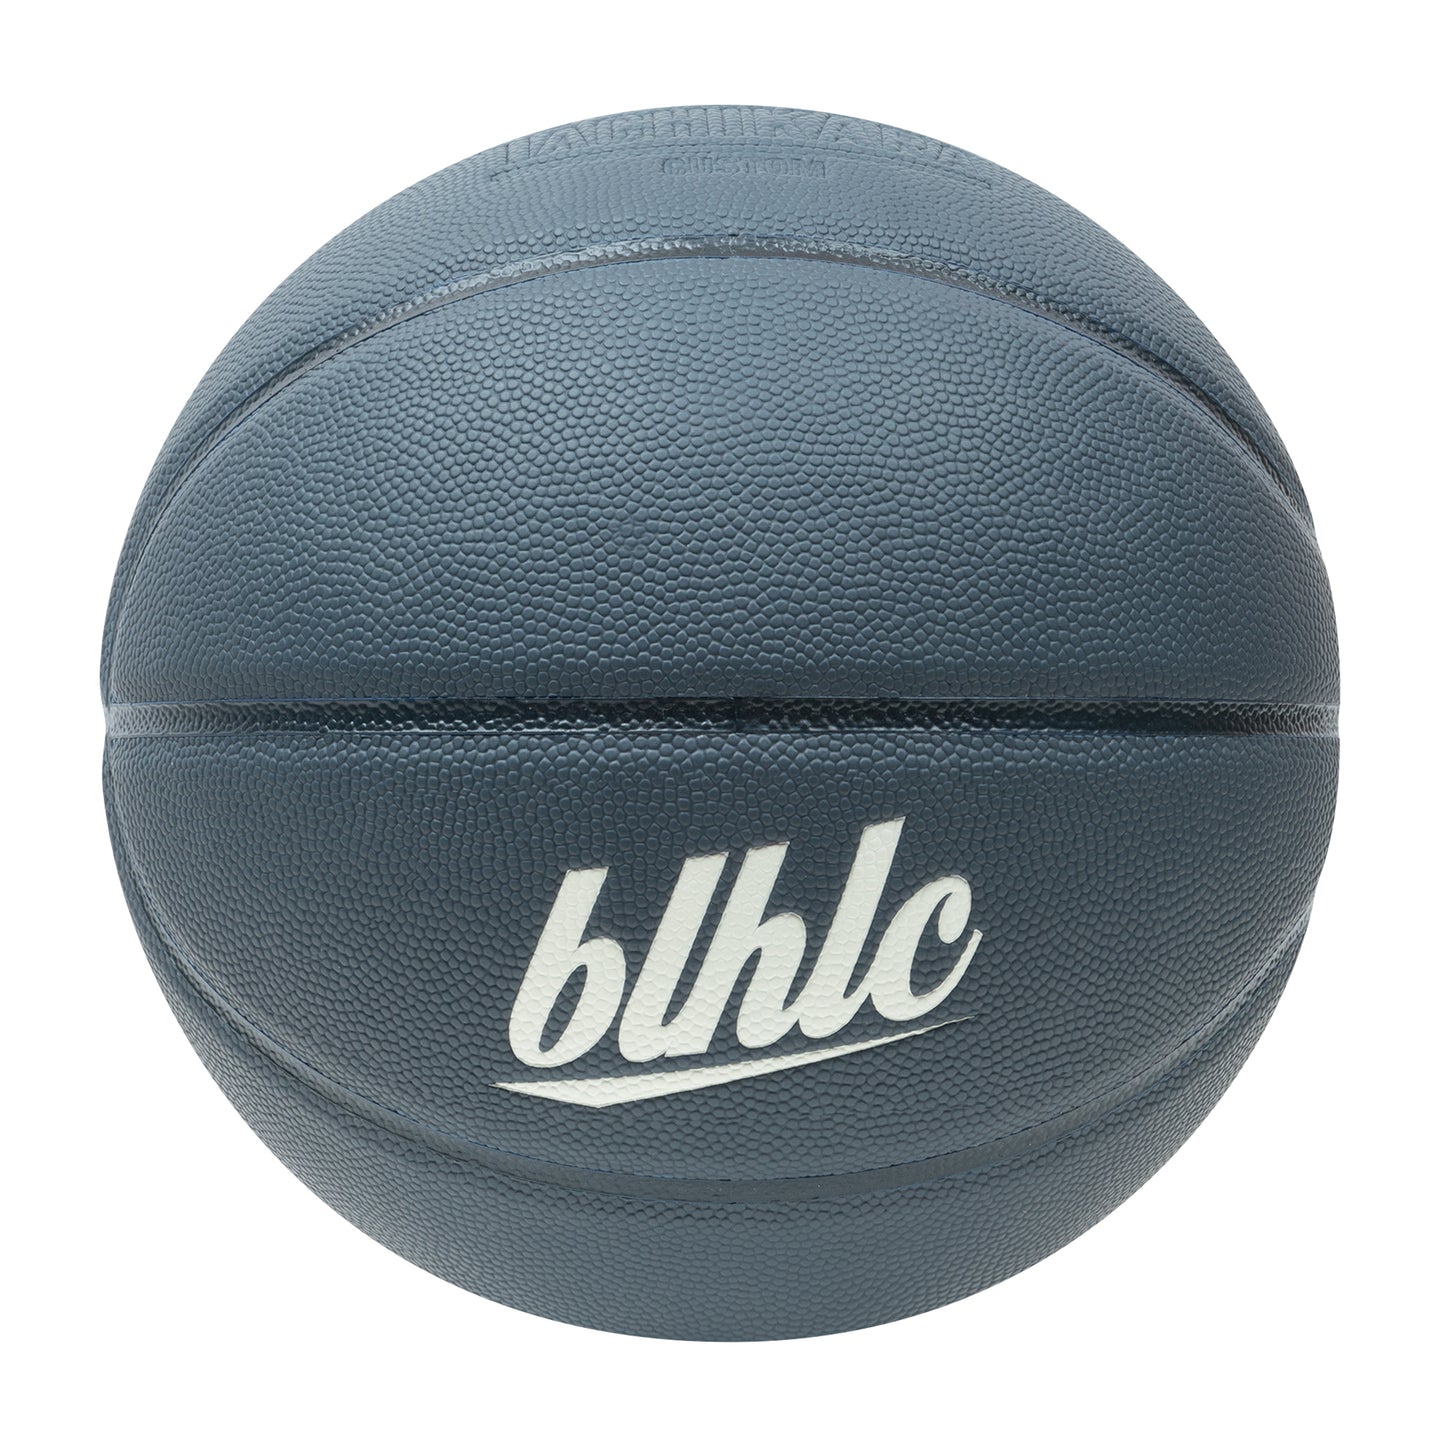 Playground Basketball / ballaholic x TACHIKARA (slate blue/dark navy/white)